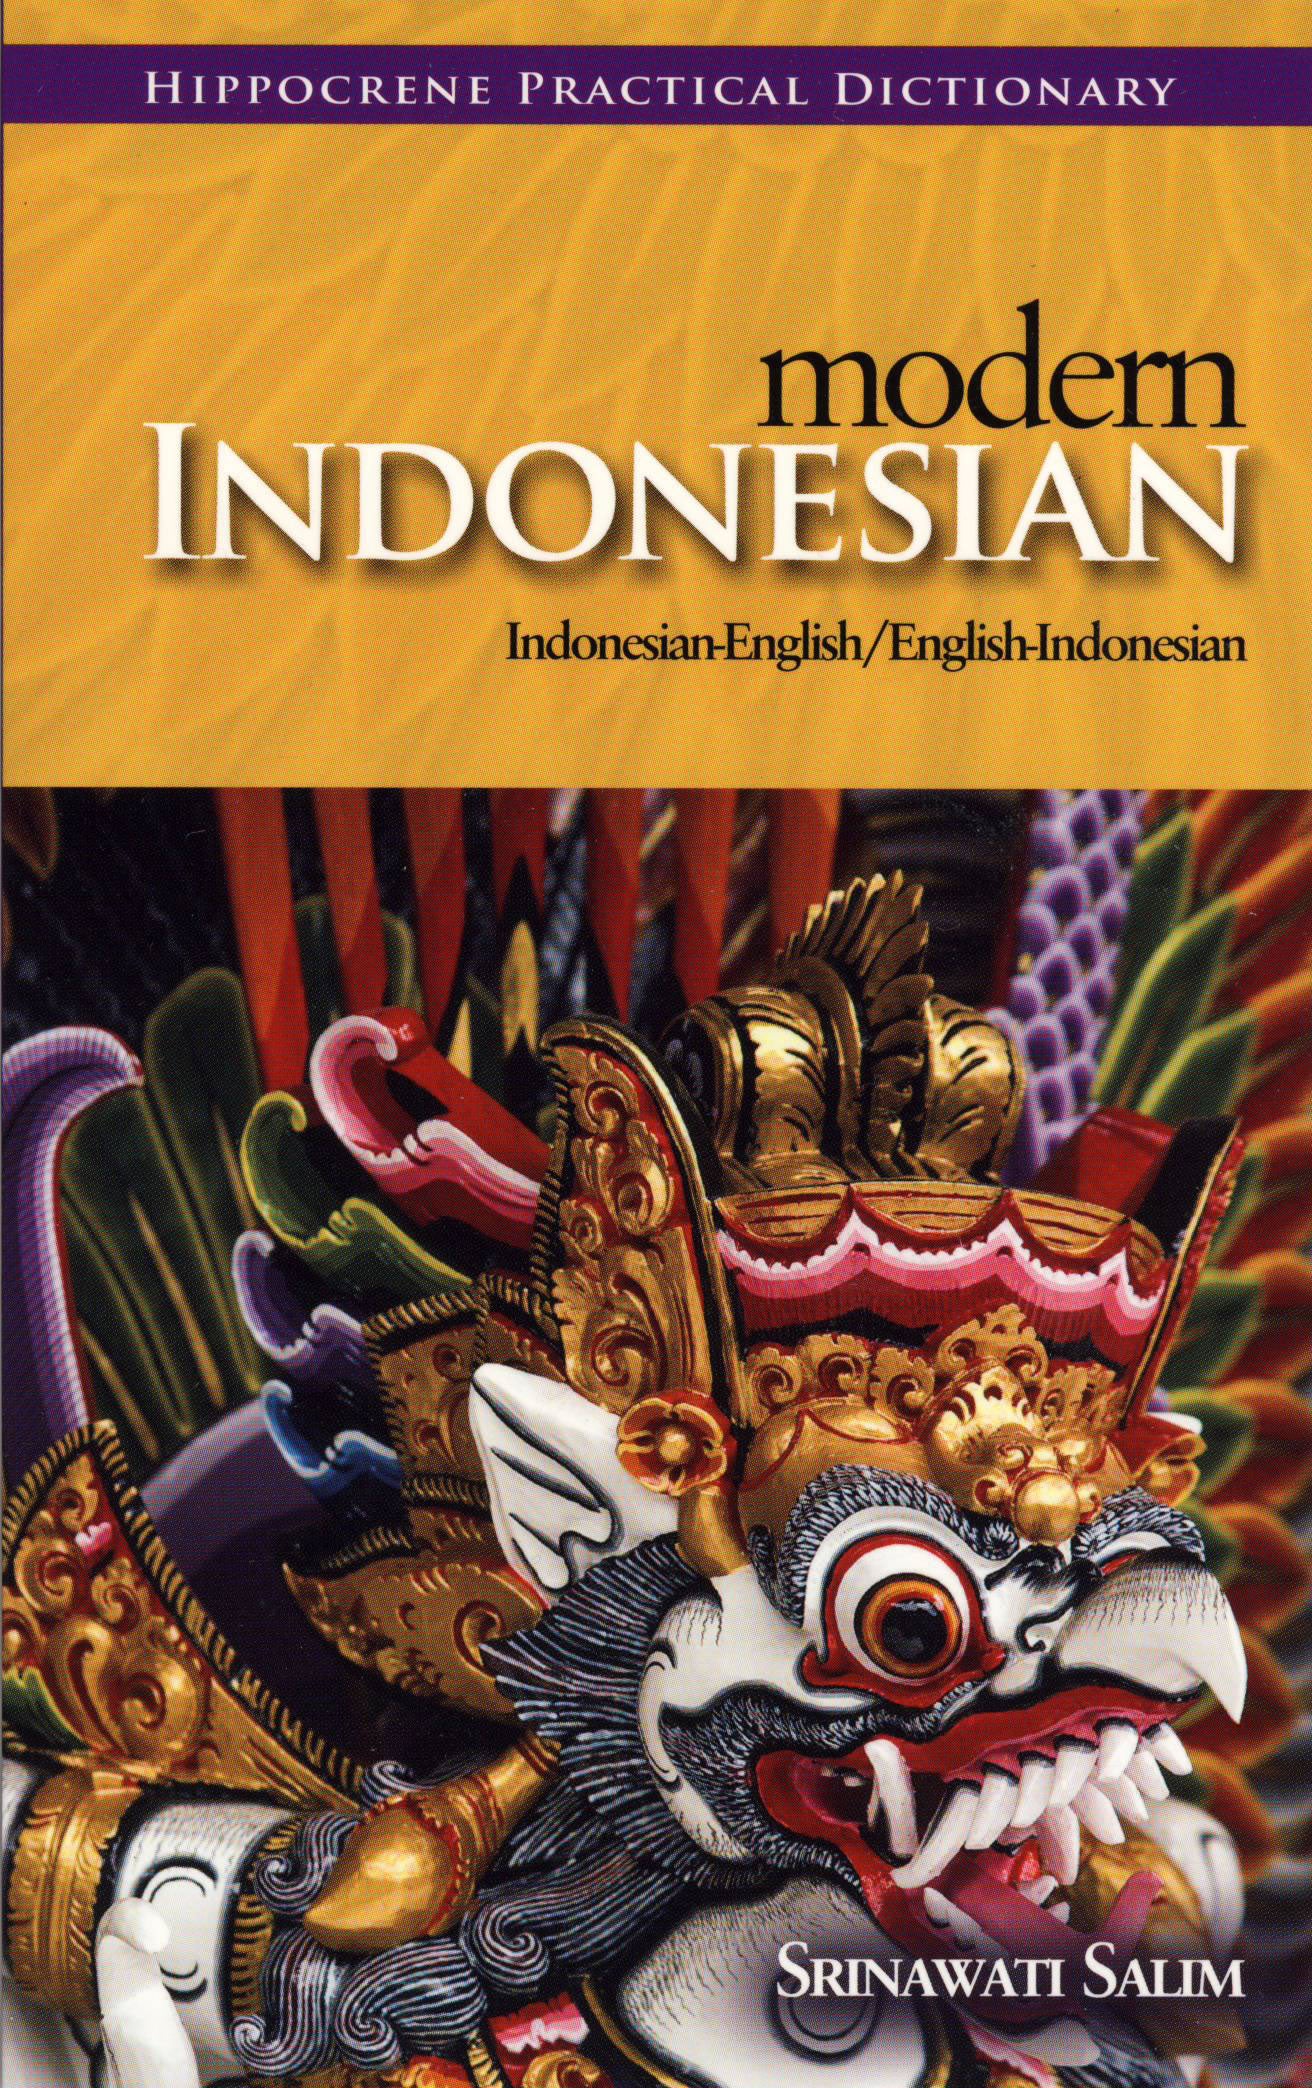 Indonesian-English / Indonesian-English Hipp Modern Dictionary